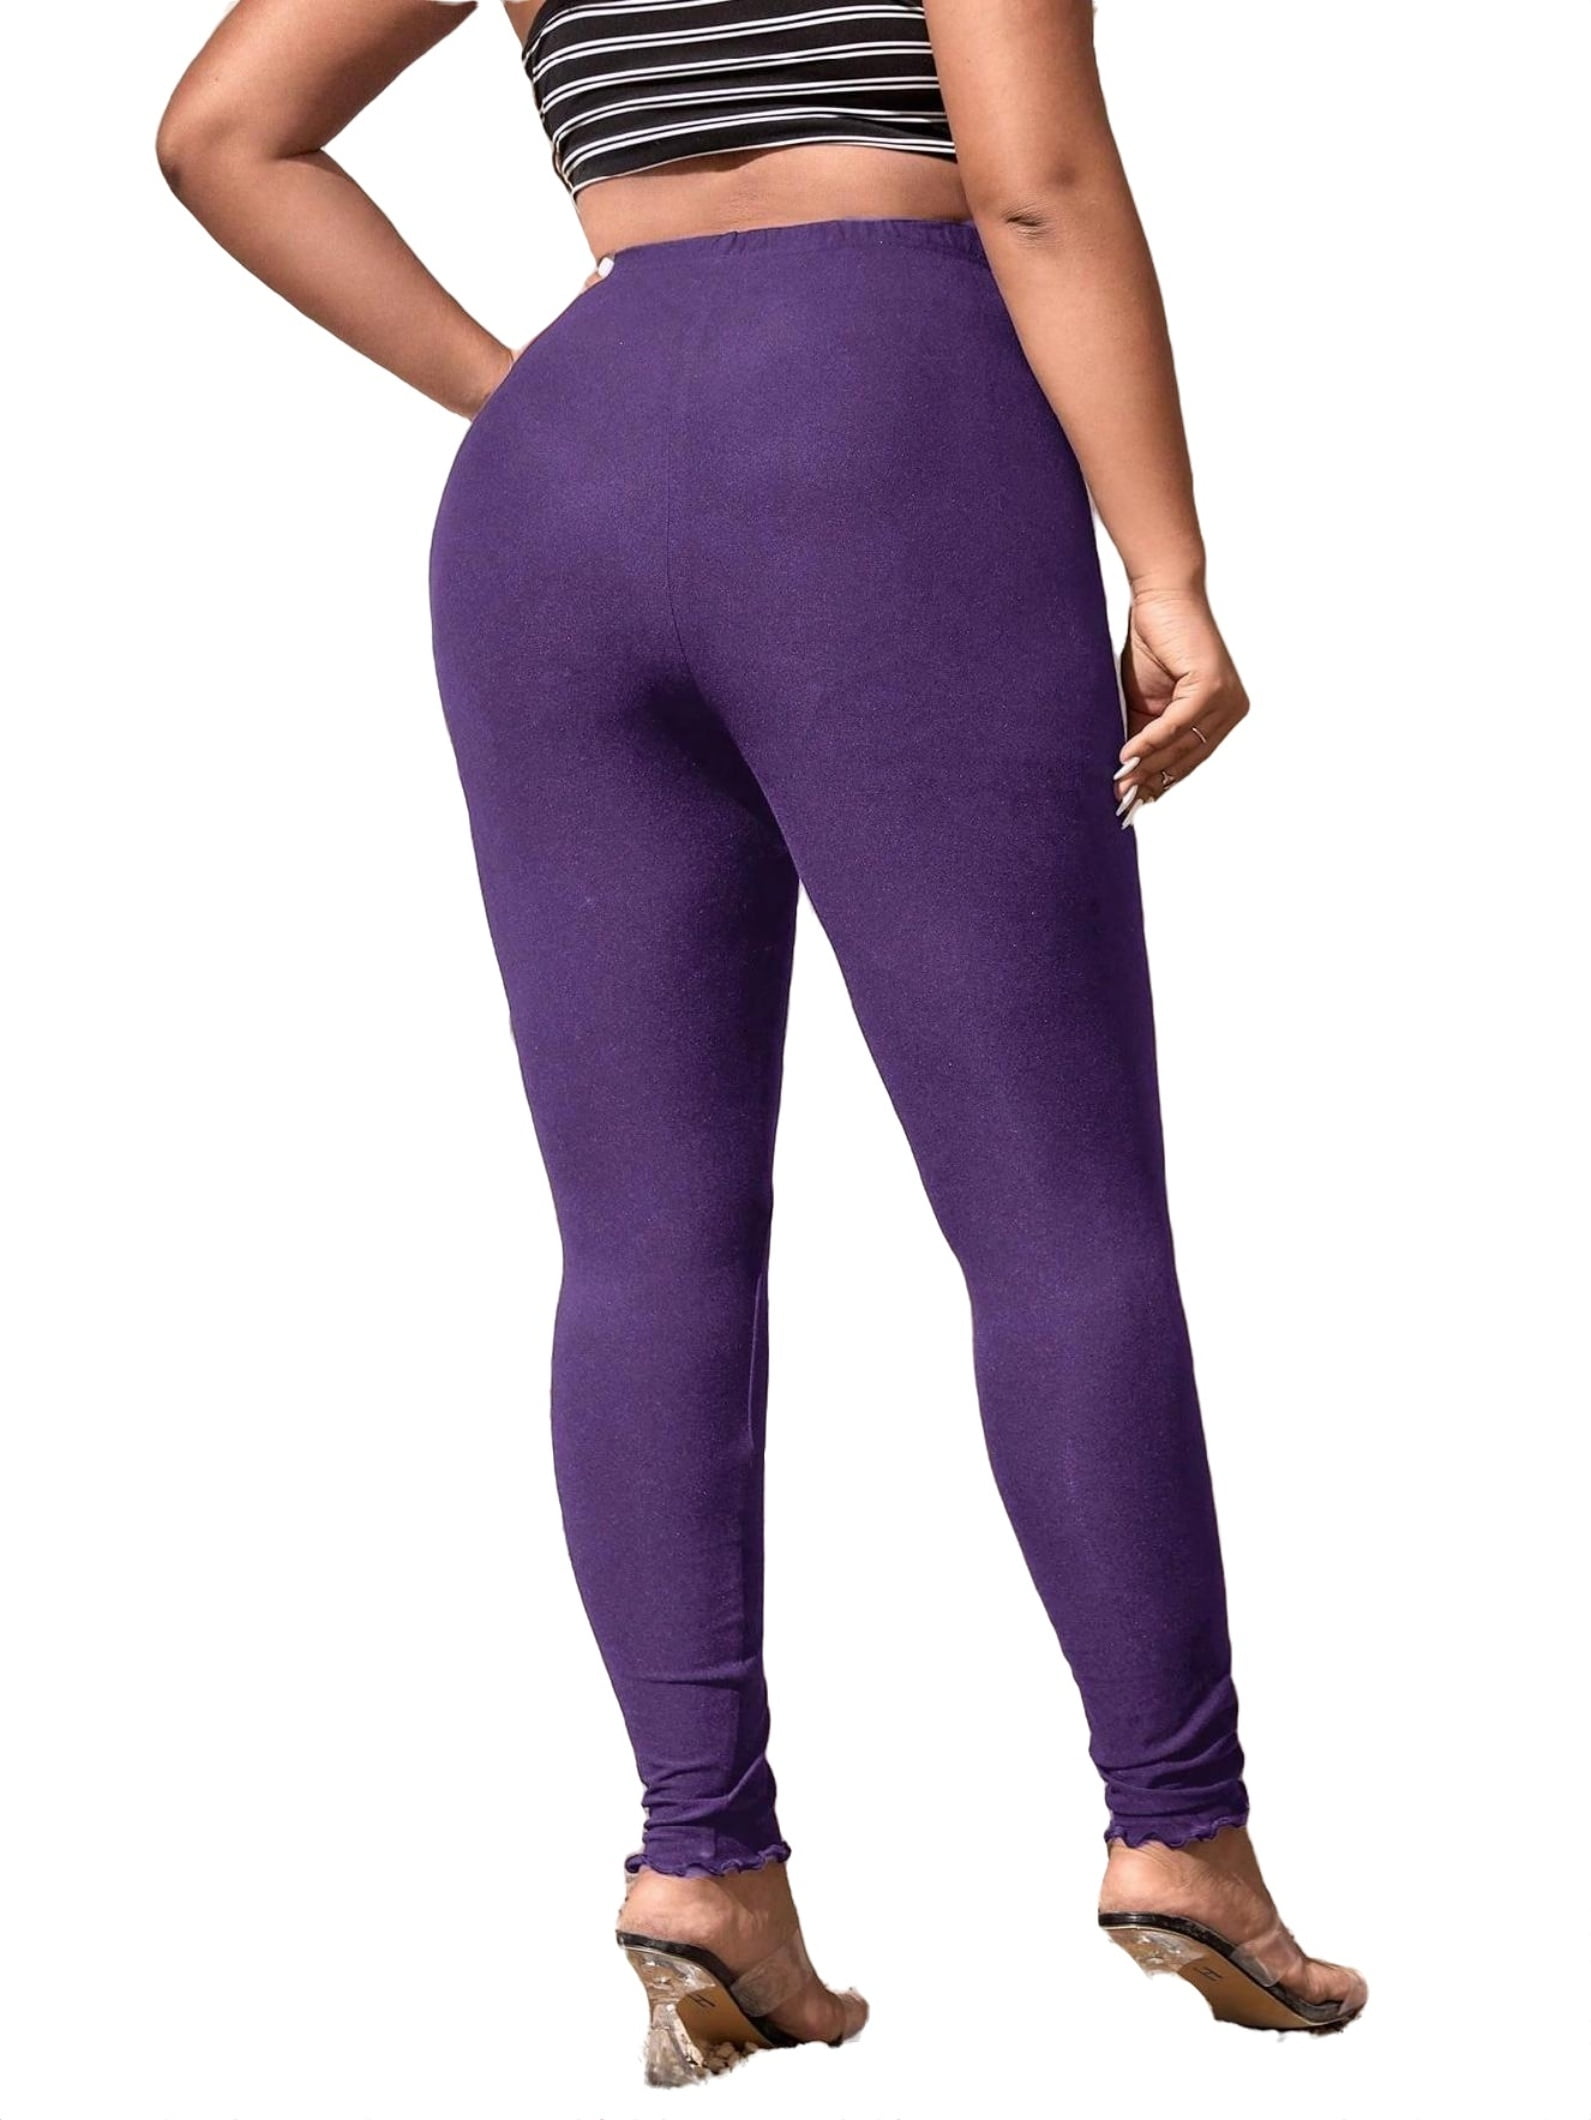 MPG Solid Purple Leggings Size 1X (Plus) - 46% off